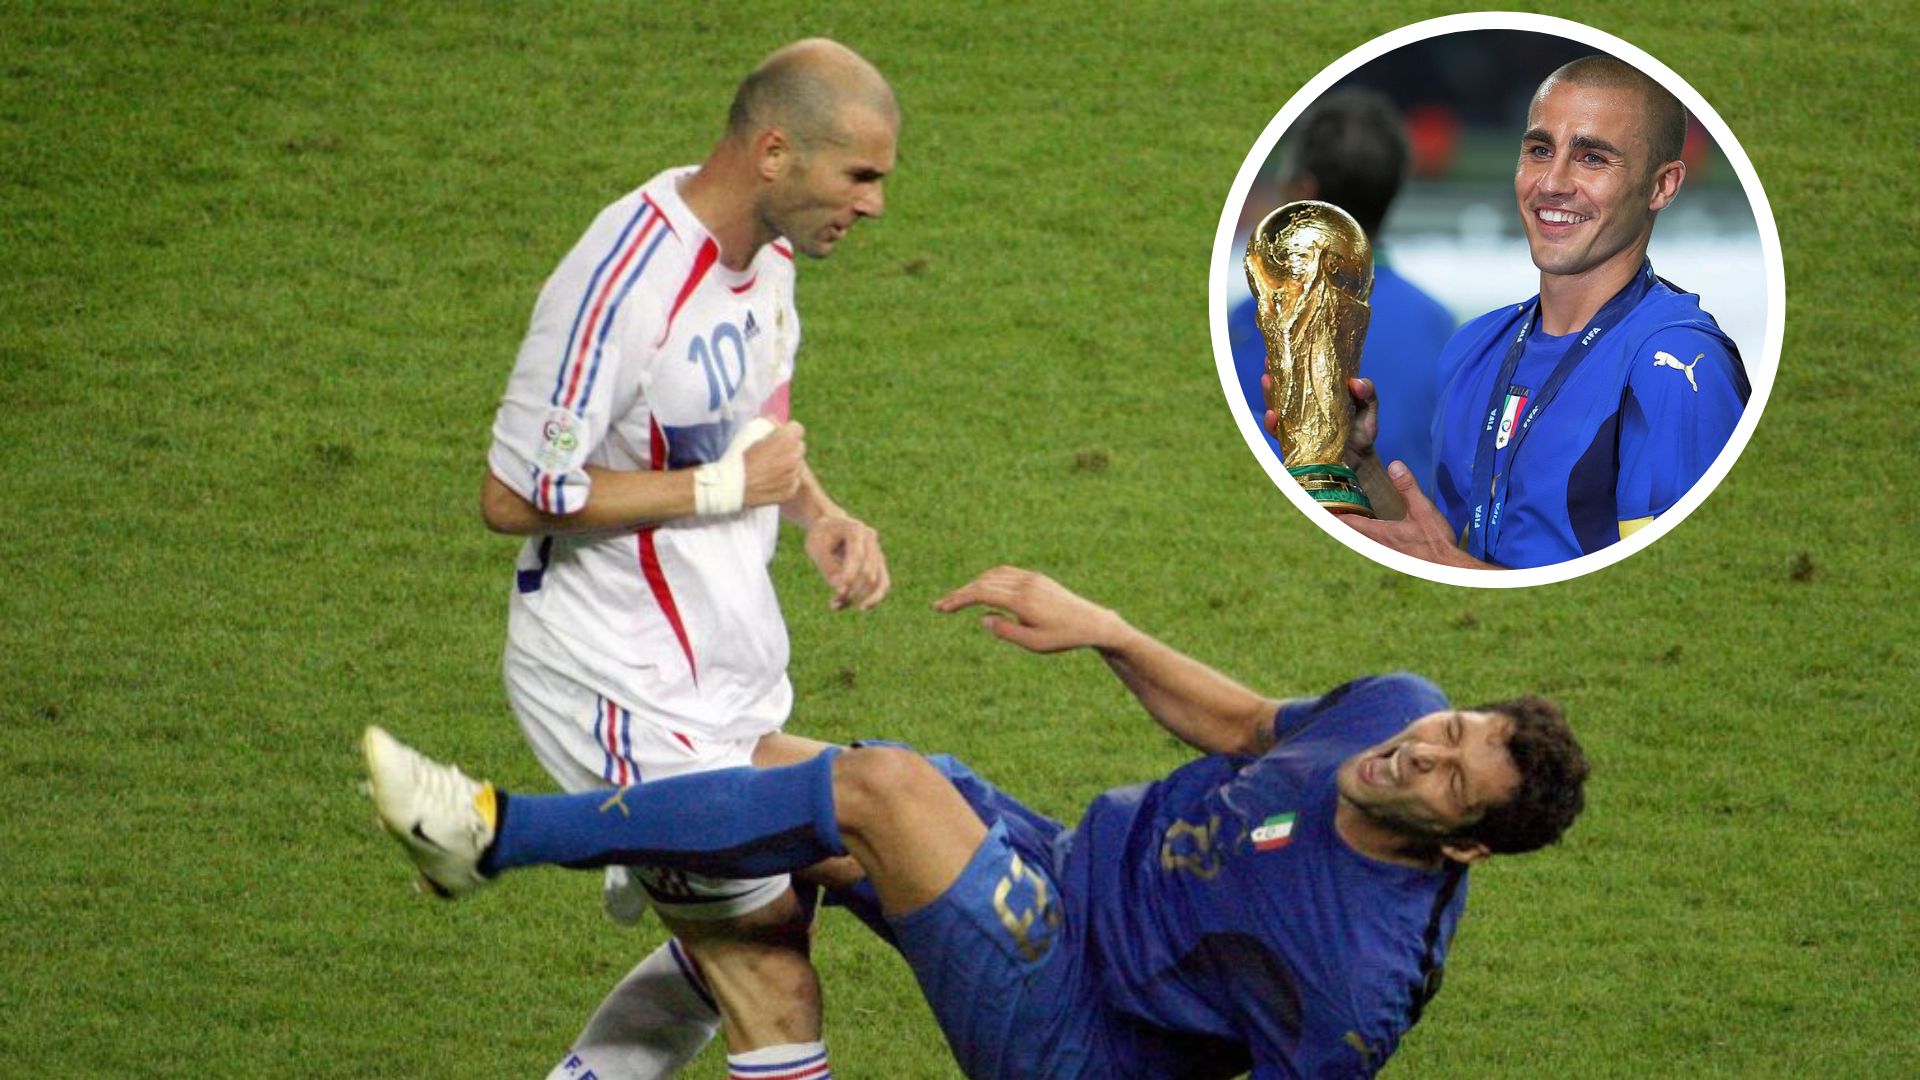 ‘I heard the knock!’ Fabio Cannavaro admits he was close enough to hear Zinedine Zidane's headbutt on Marco Materazzi in the 2006 World Cup final